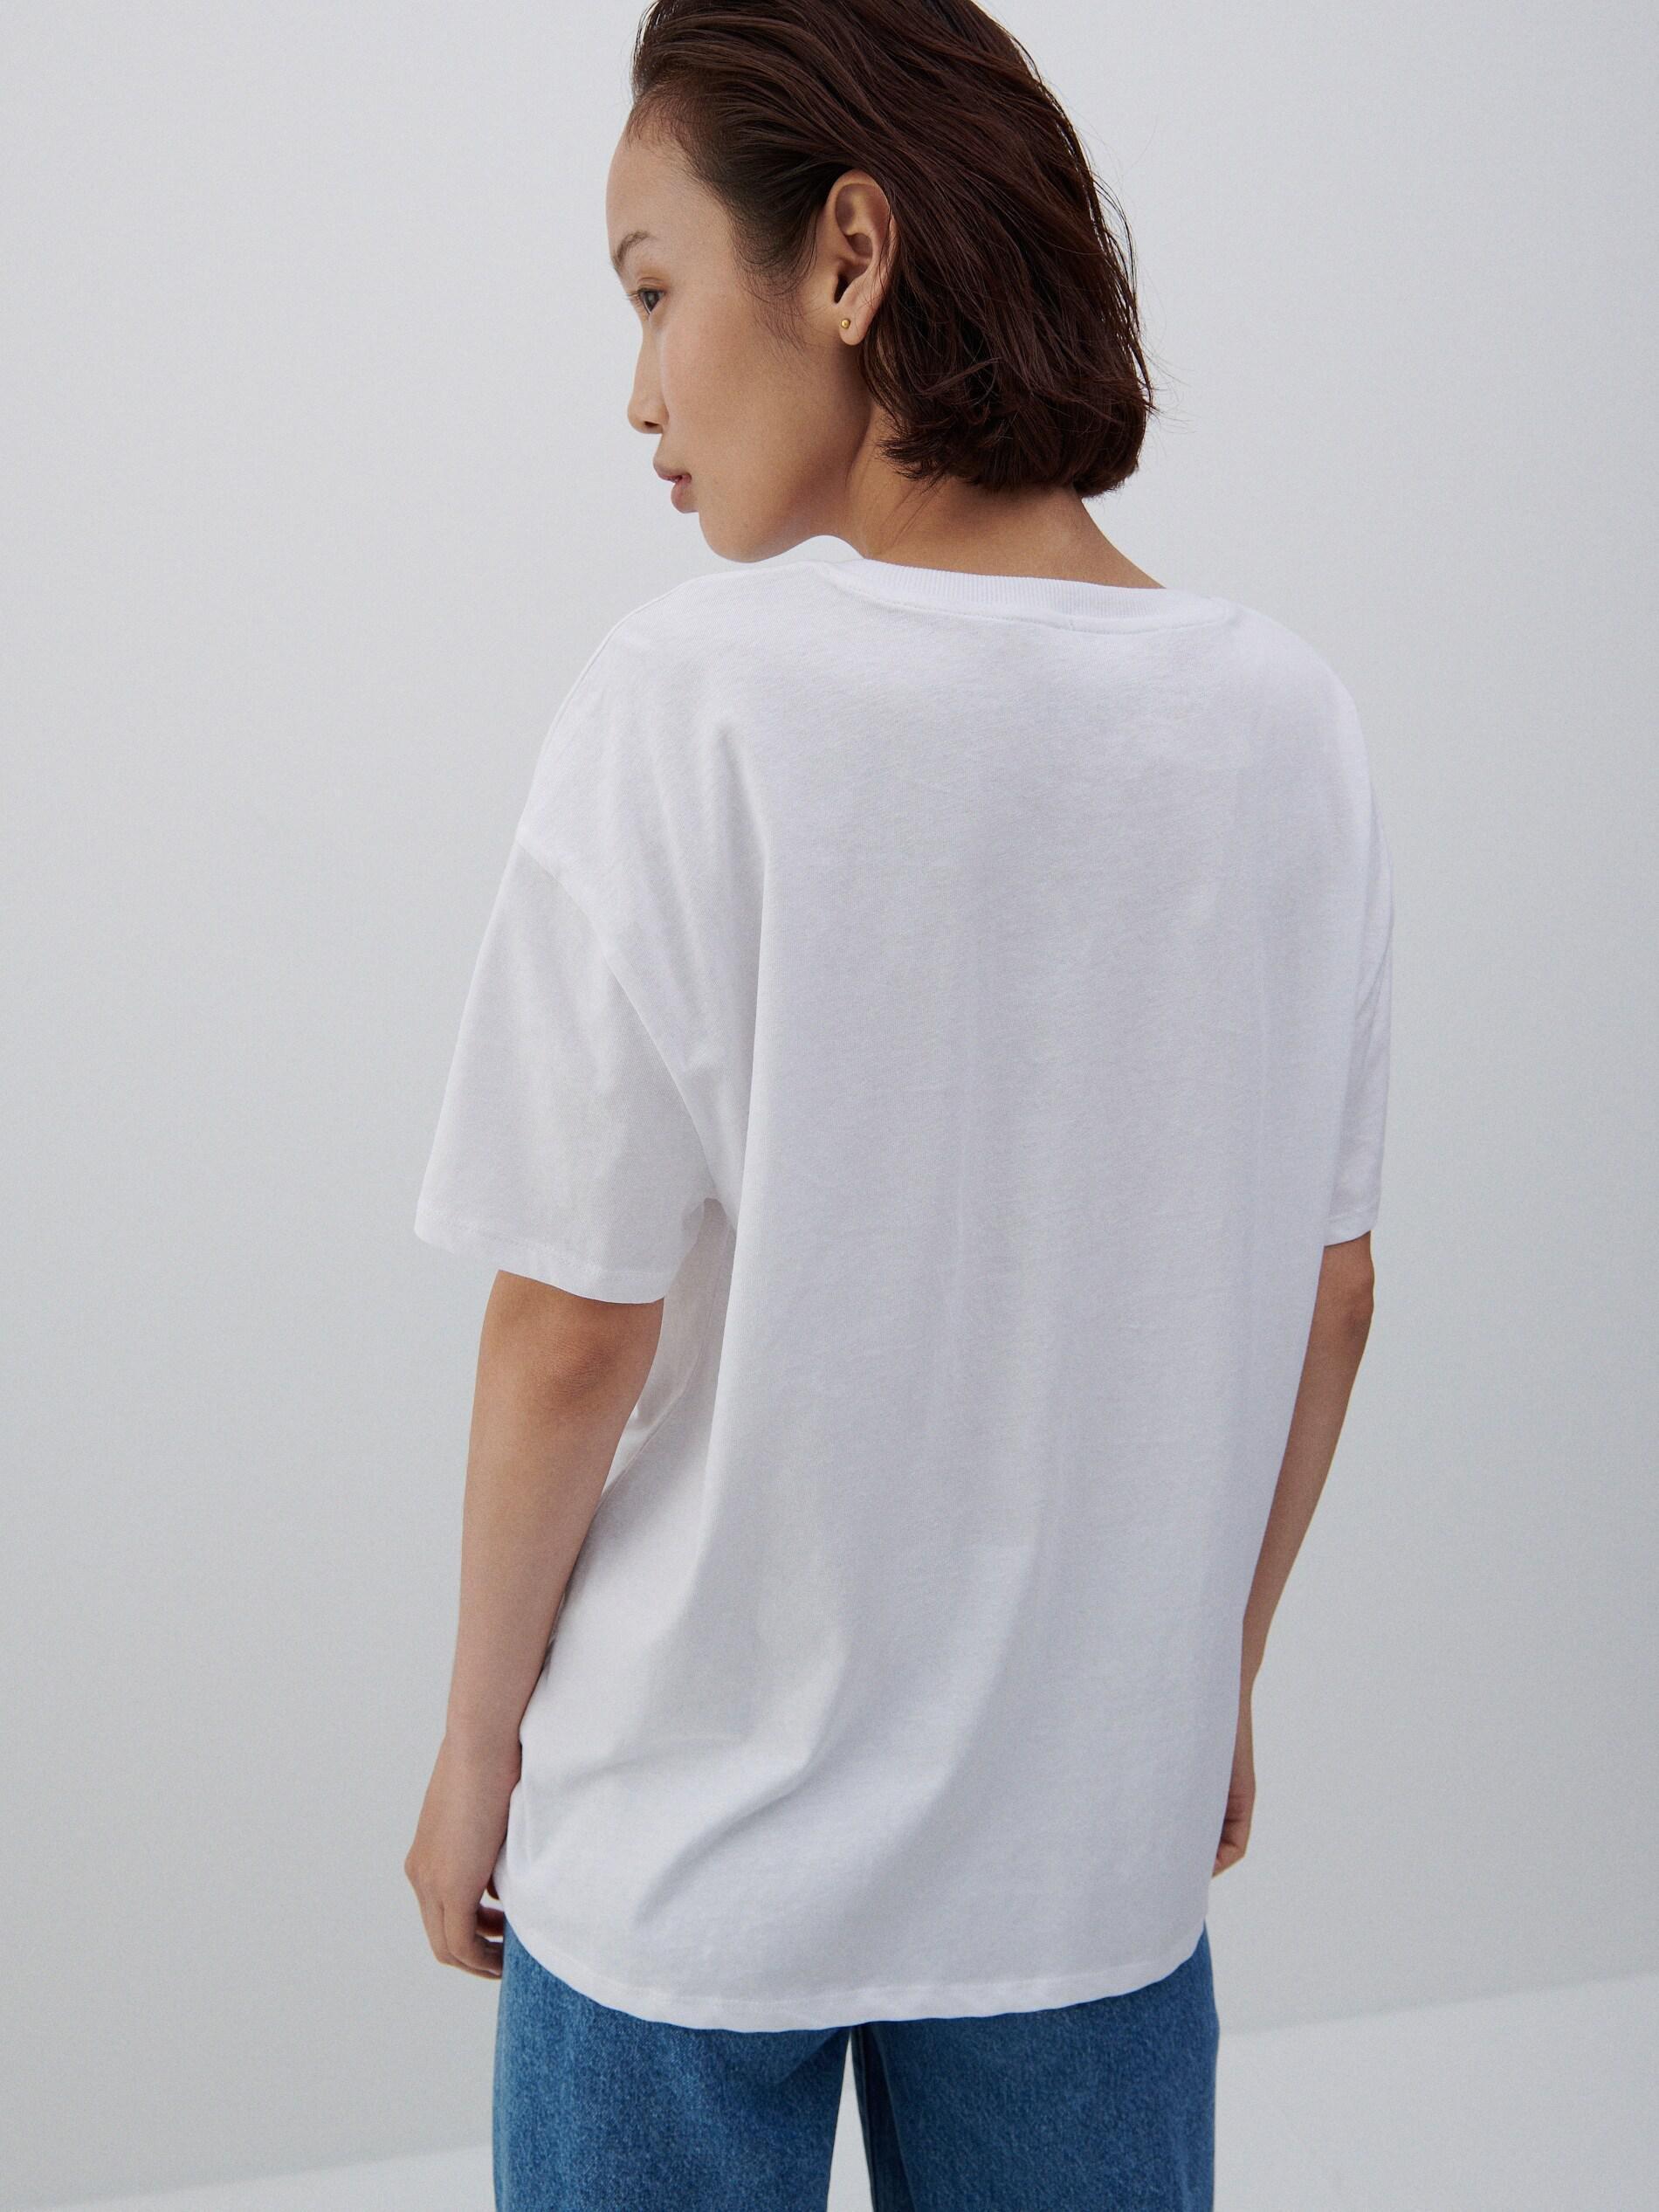 Reserved - White Cotton T-Shirt, Women